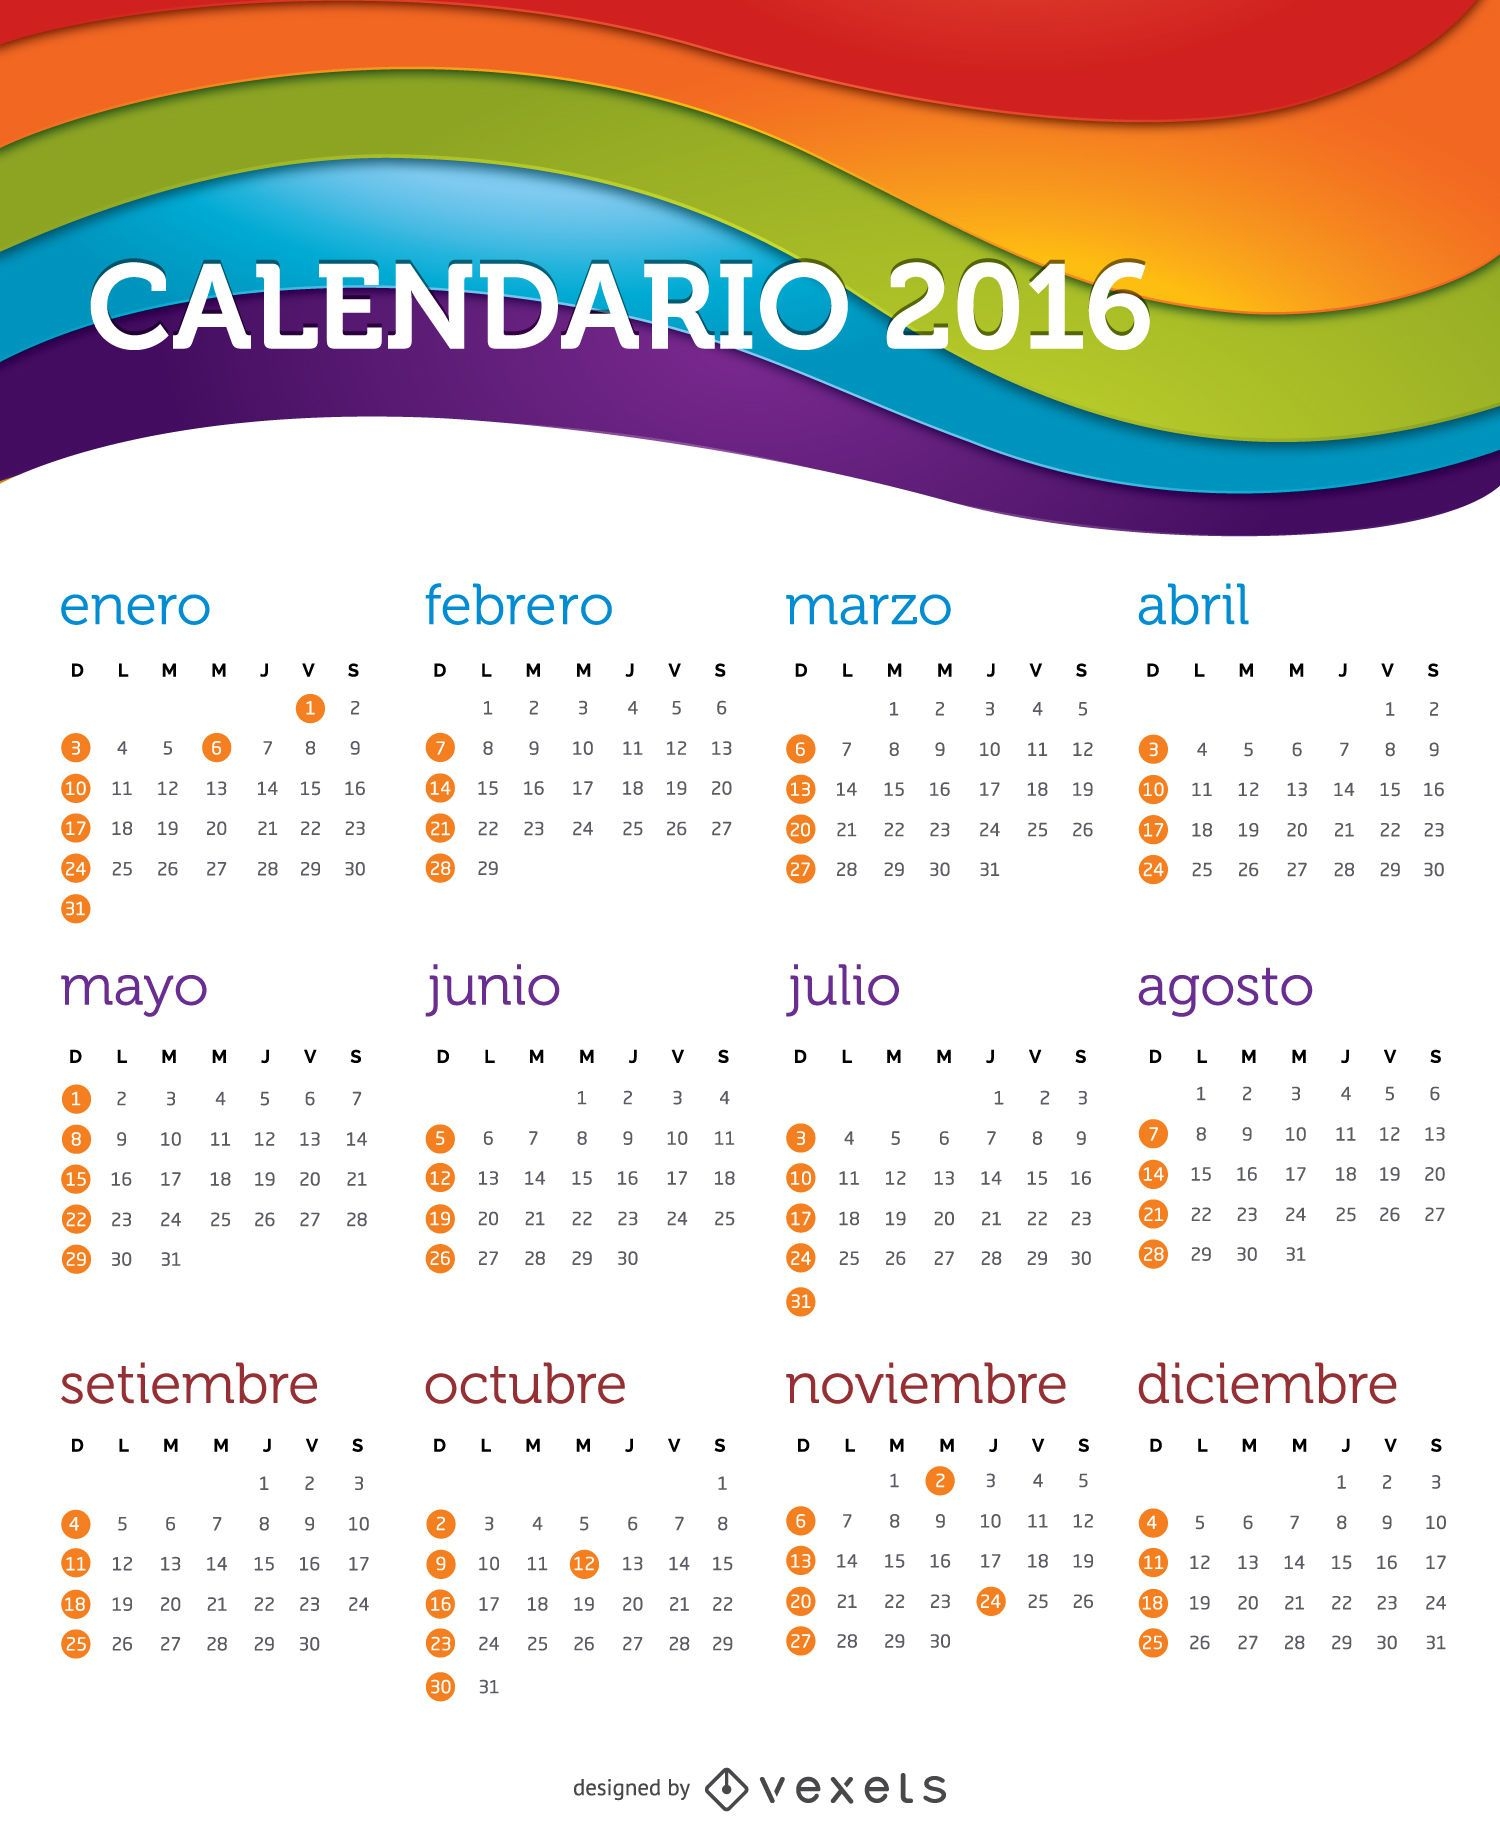 Plantilla de calendario espa?ol colorido 2016